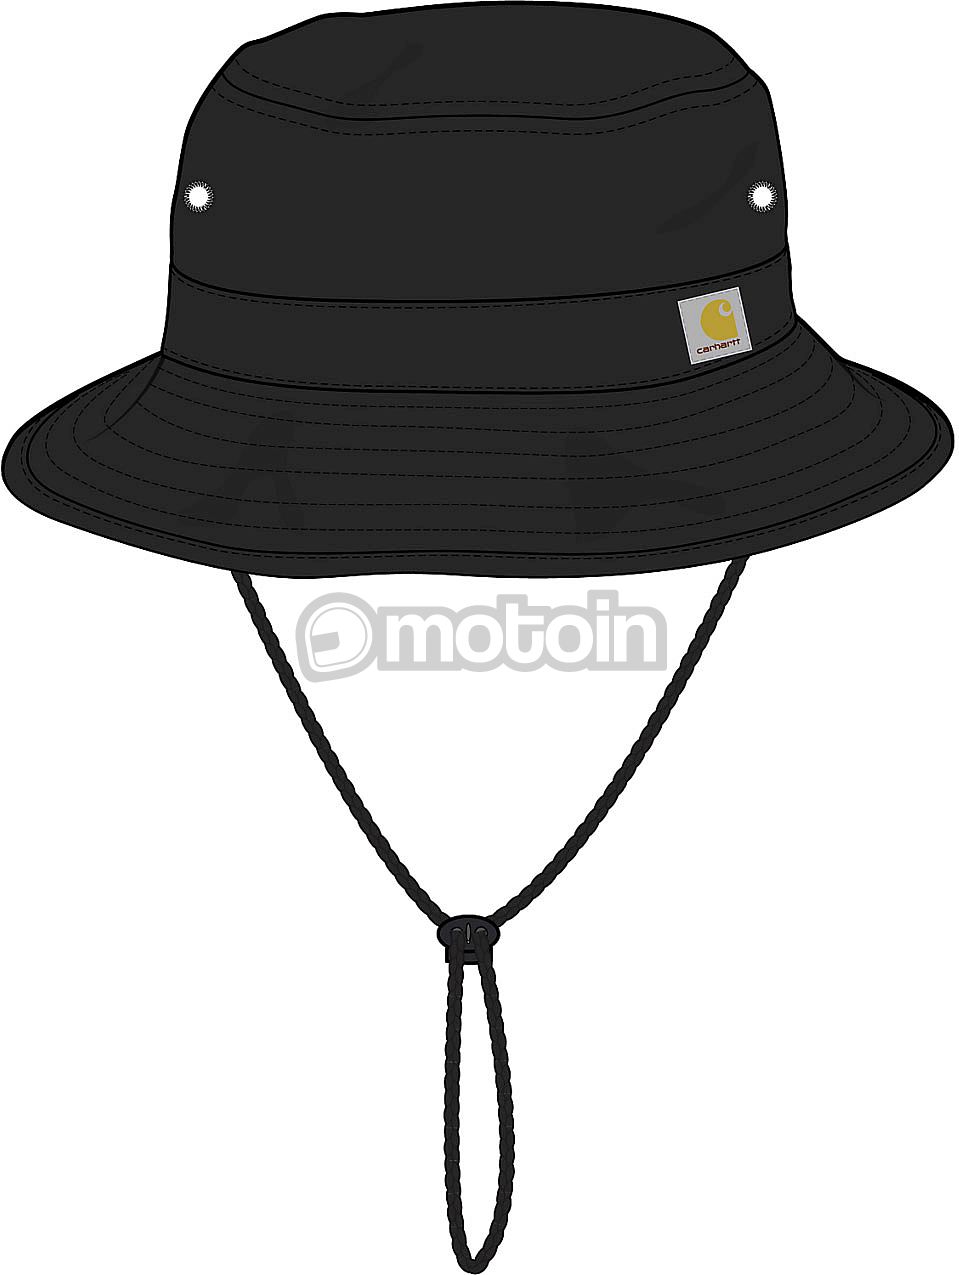 Carhartt Rain Defender Bucket, sombrero